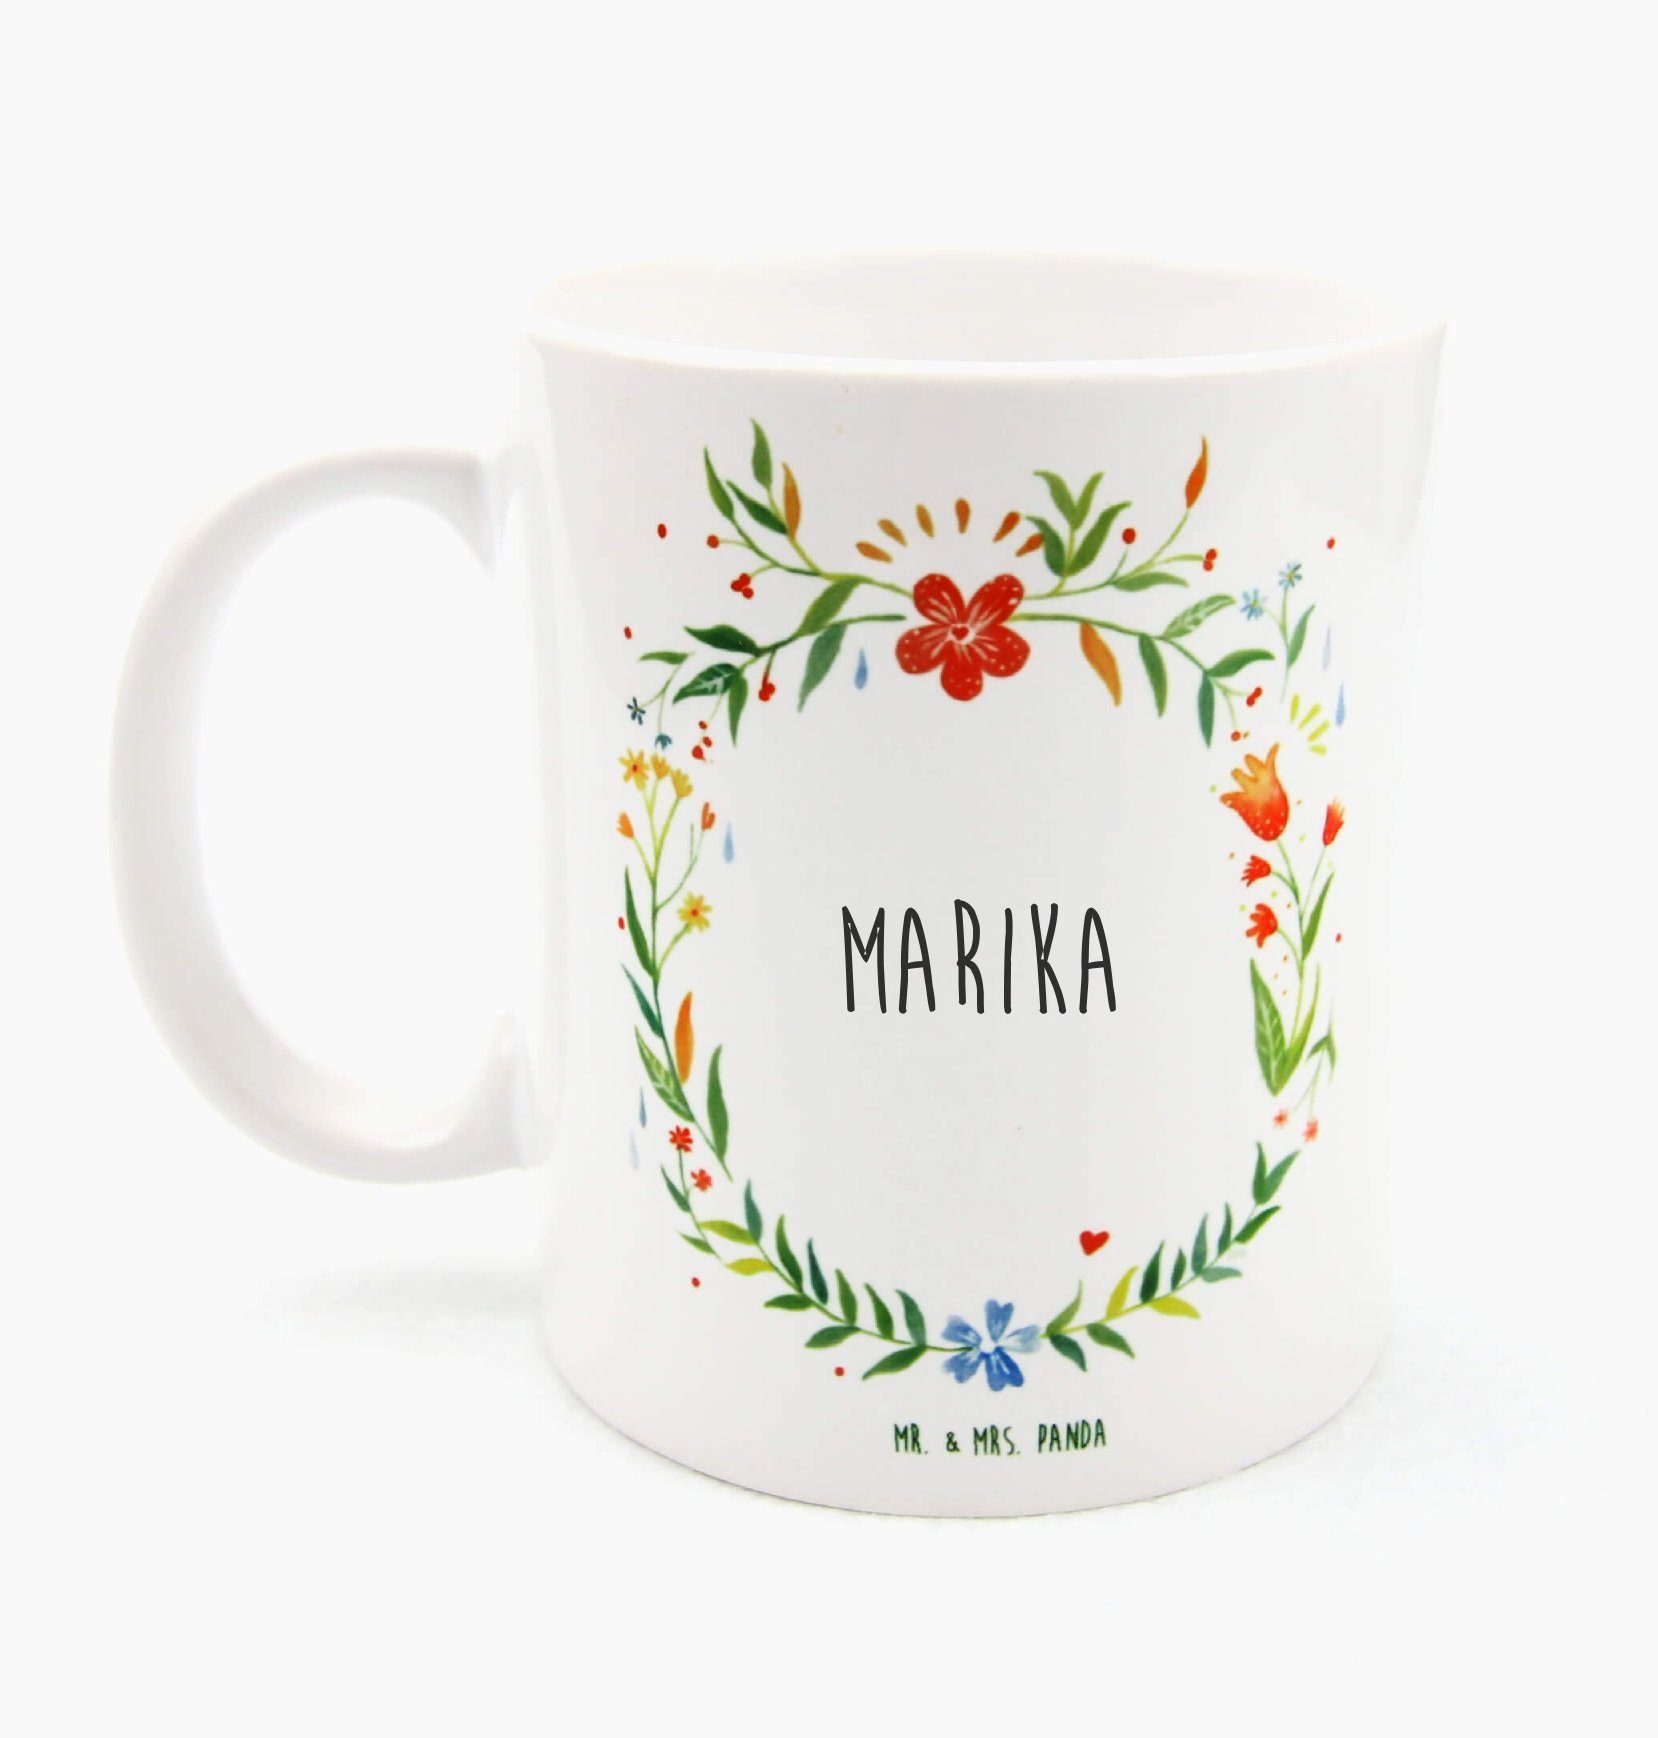 Mr. & Mrs. Panda Tasse Marika - Geschenk, Keramiktasse, Kaffeetasse, Kaffeebecher, Geschenk, Keramik